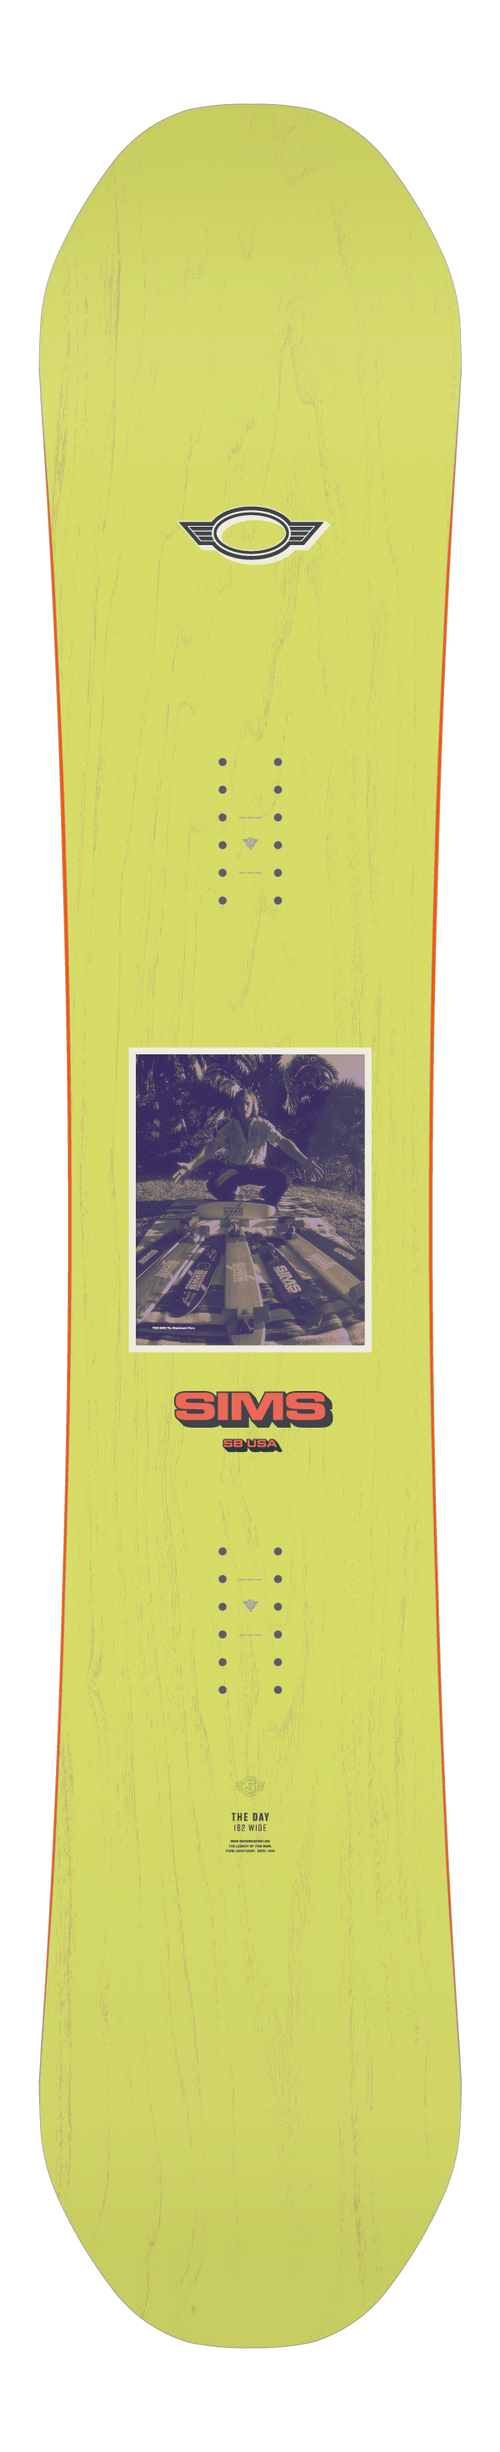 Sims The Day Snowboard 2023 - M I L O S P O R T